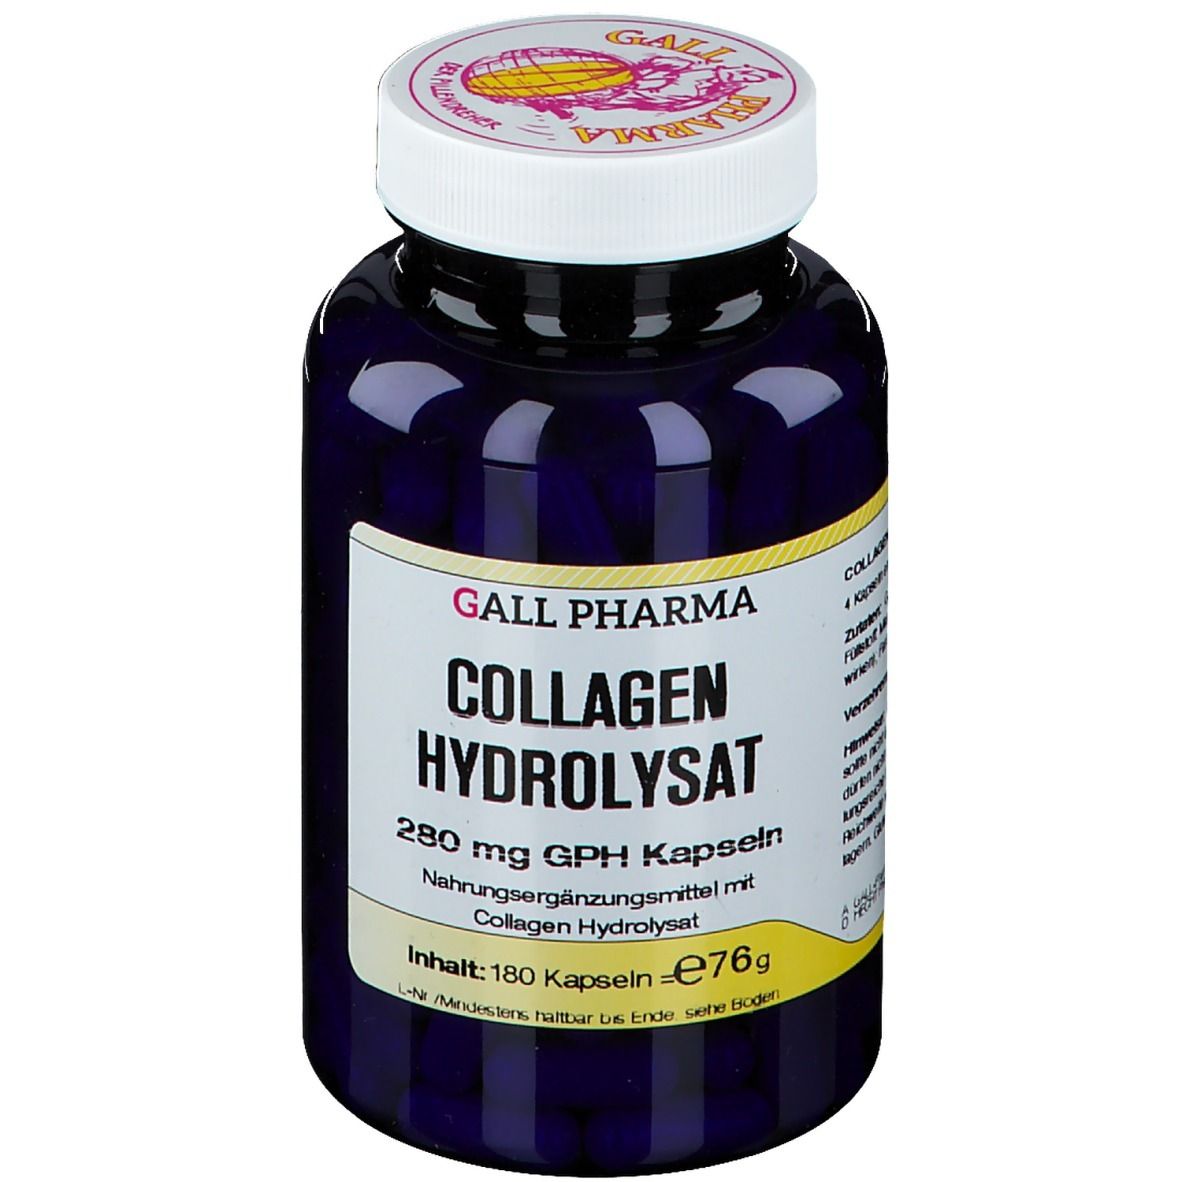 Image of GALL PHARMA Collagen Hydrolysat 280 mg GPH Kapseln